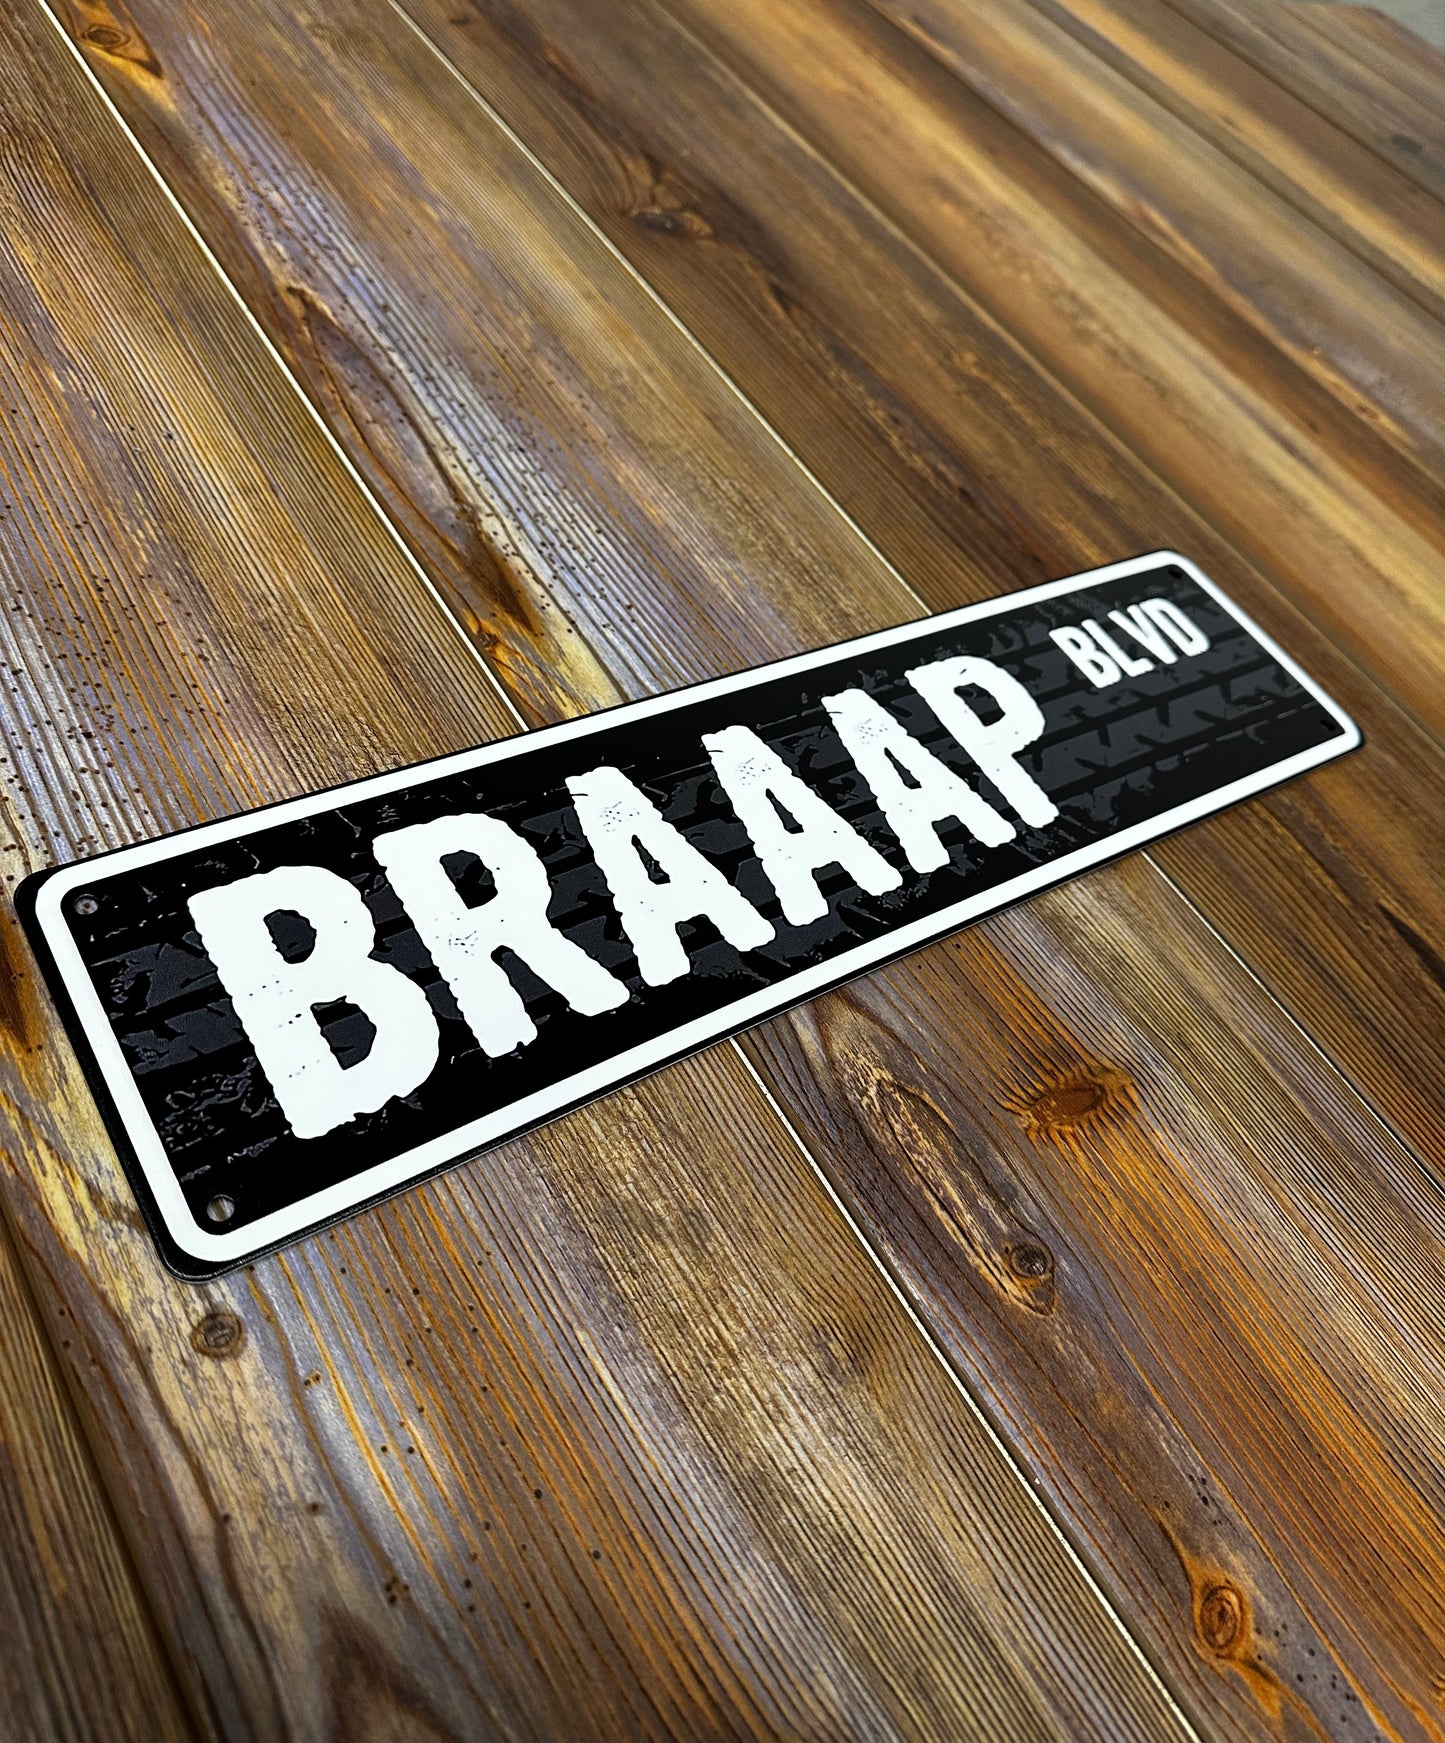 BRAAAP Blvd Sign